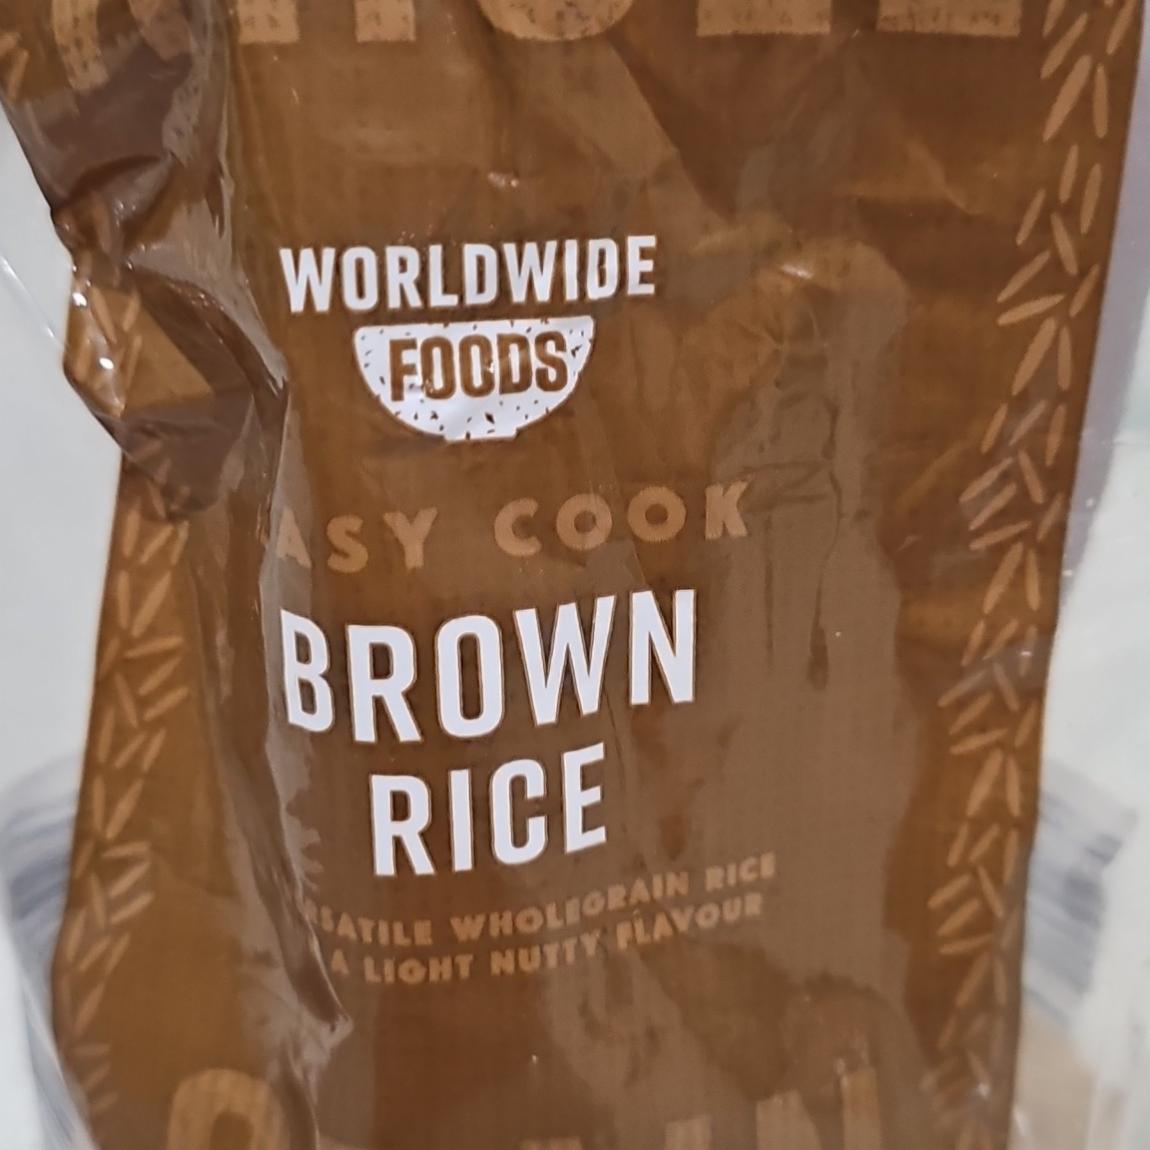 Fotografie - Easy Cook Brown Rice Worldwide Foods